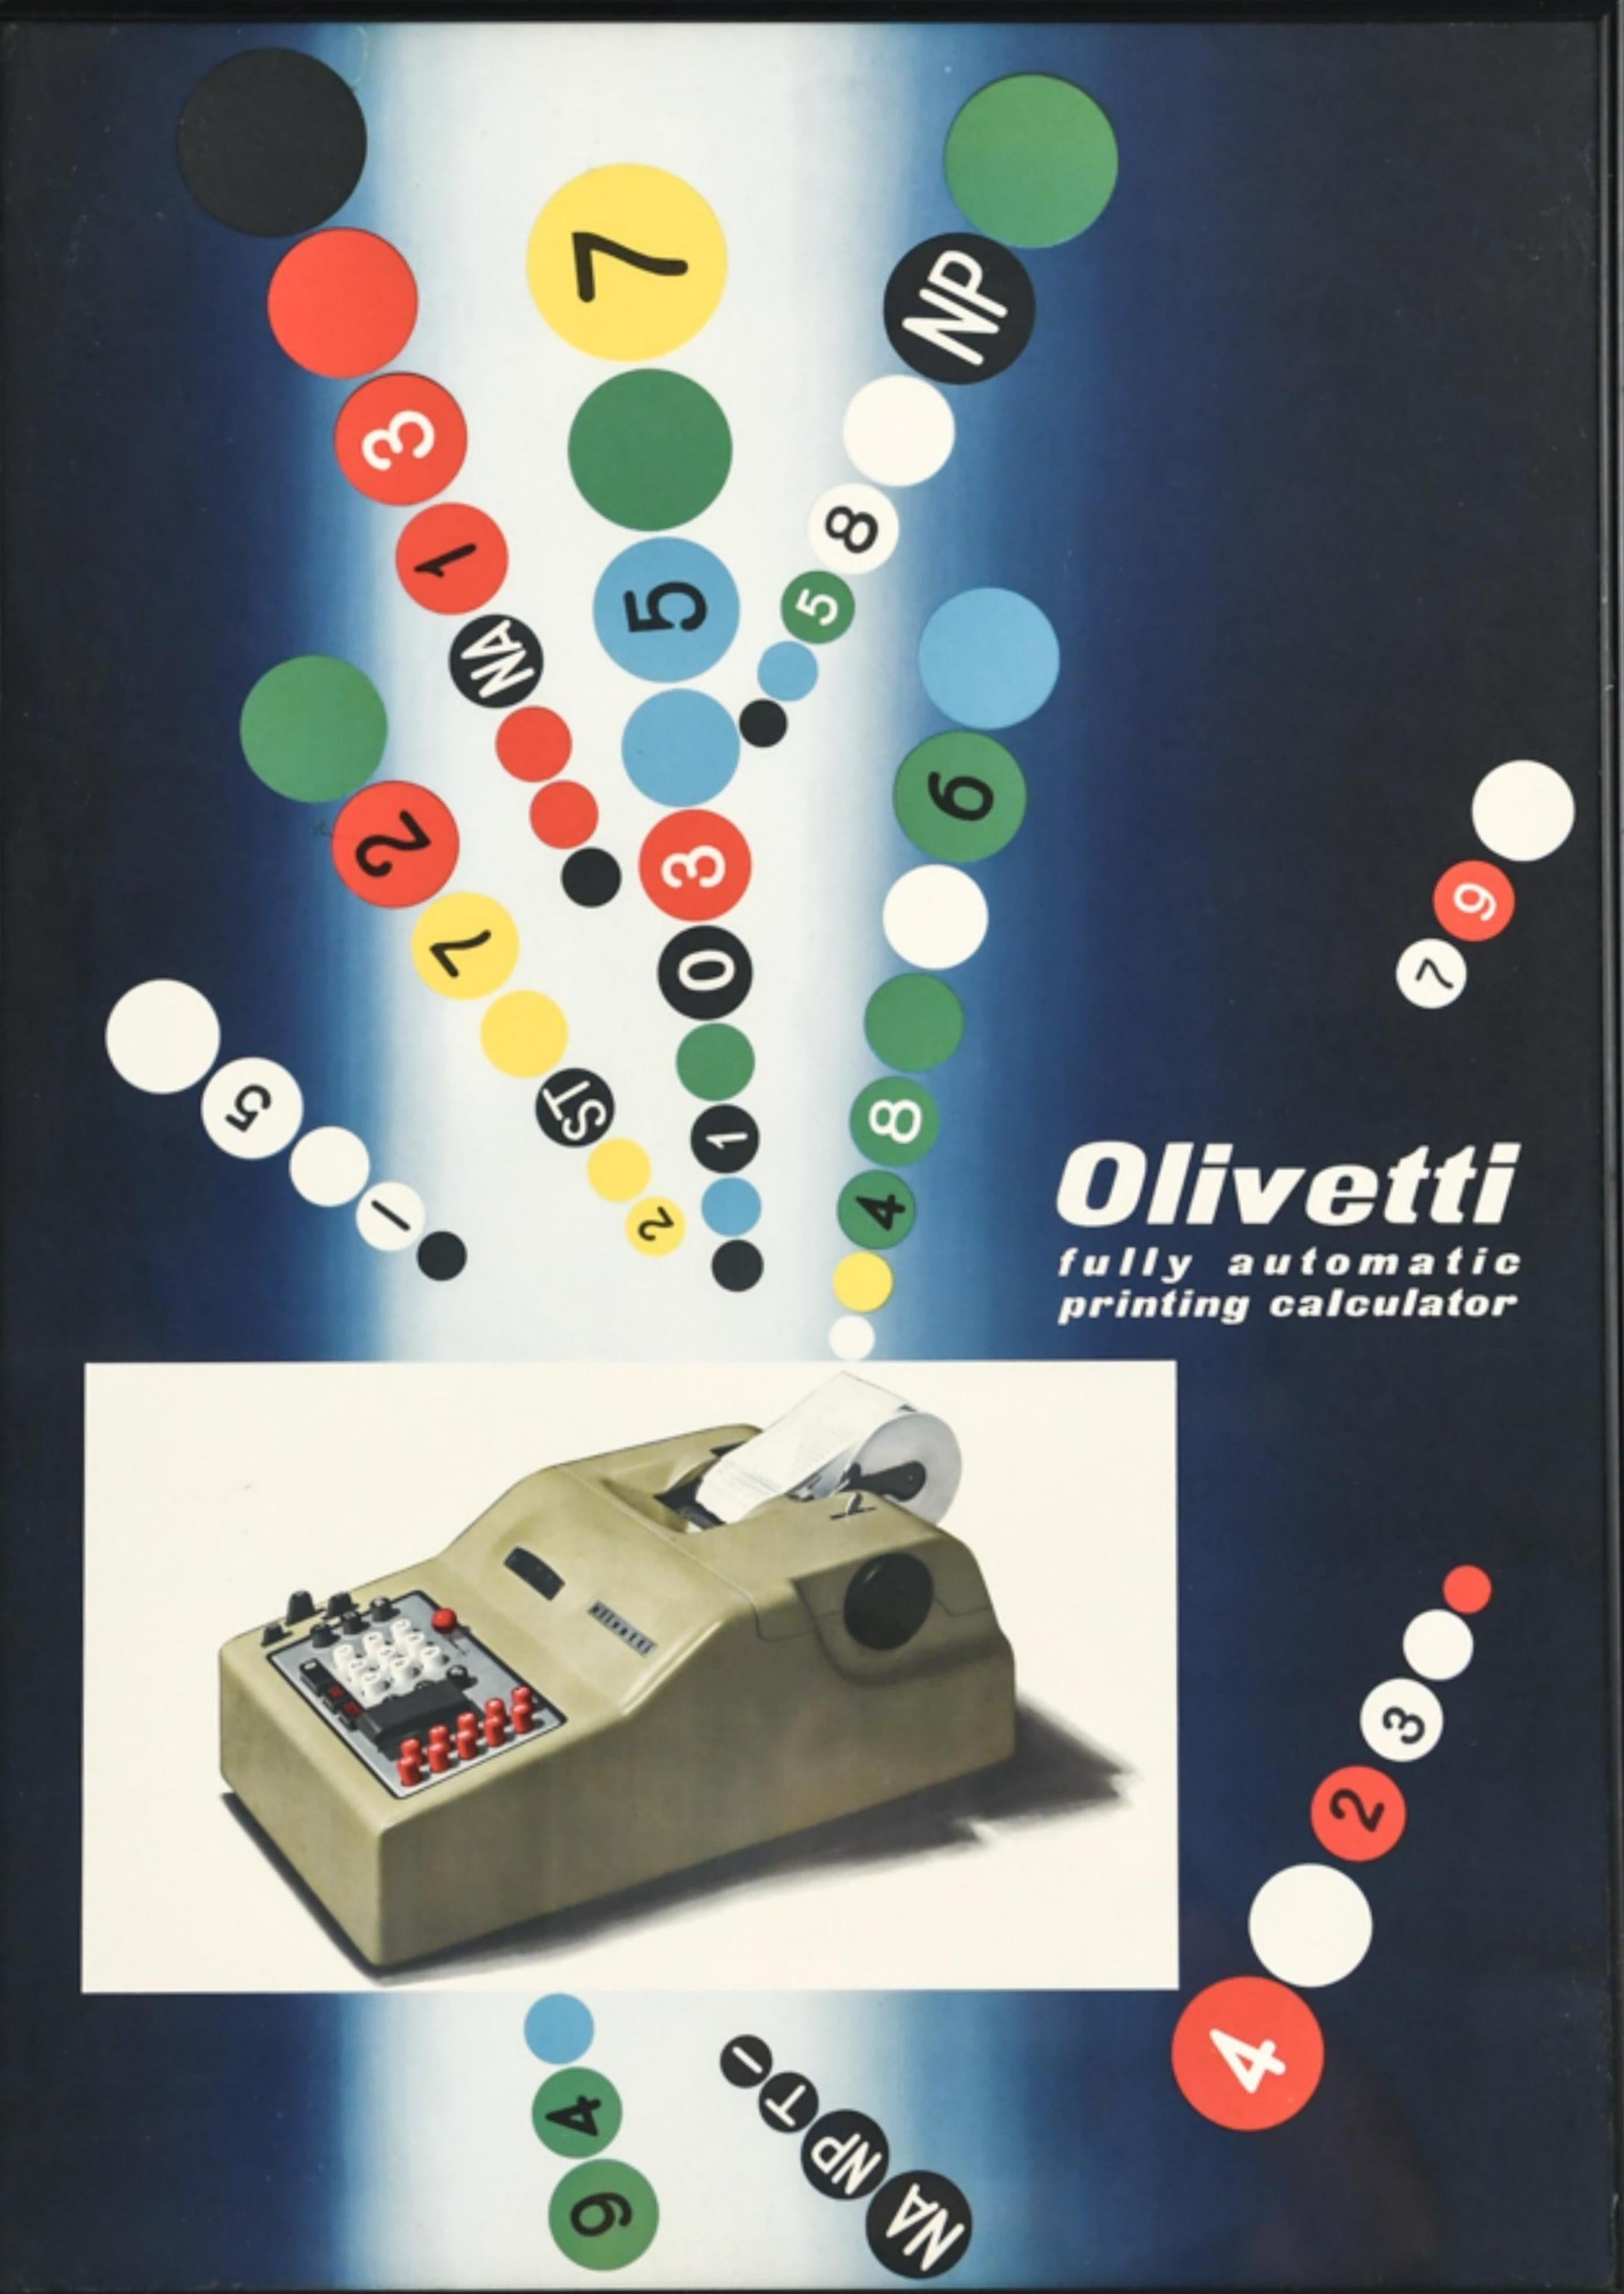 Olivetti (Fully Automatic Printing Calculator)